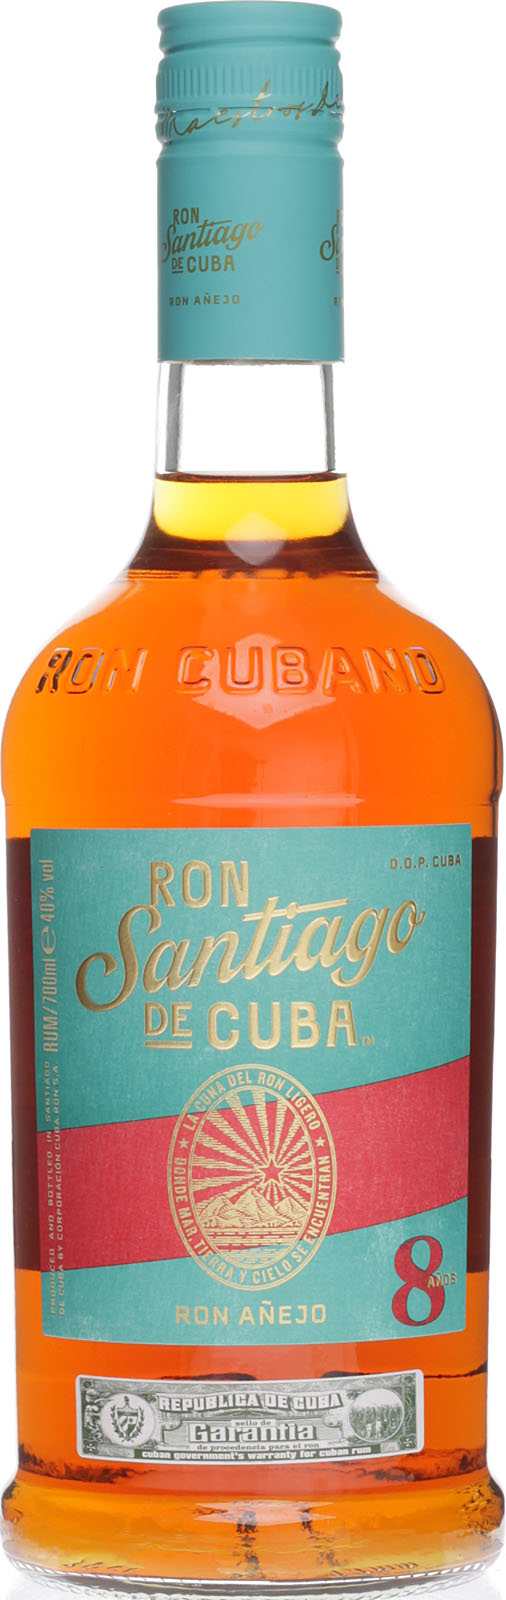 Anejo im Tradicion Jahre Cuba Santiago 8 de Ron Shop